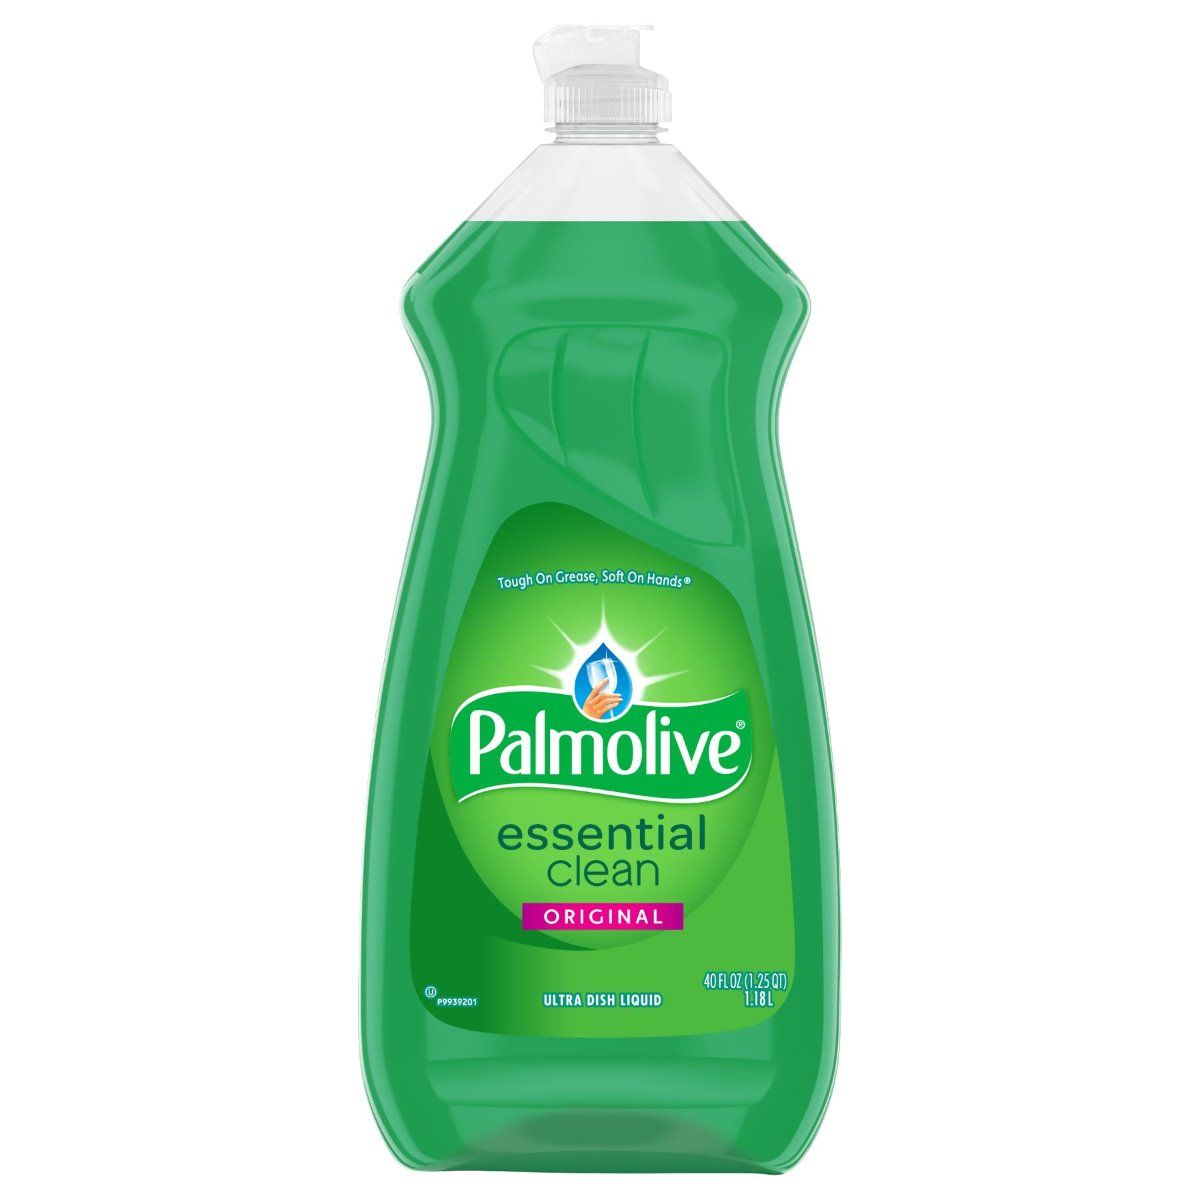 Palmolive Essential Clean Dish Liquid Original - 40oz/6pk